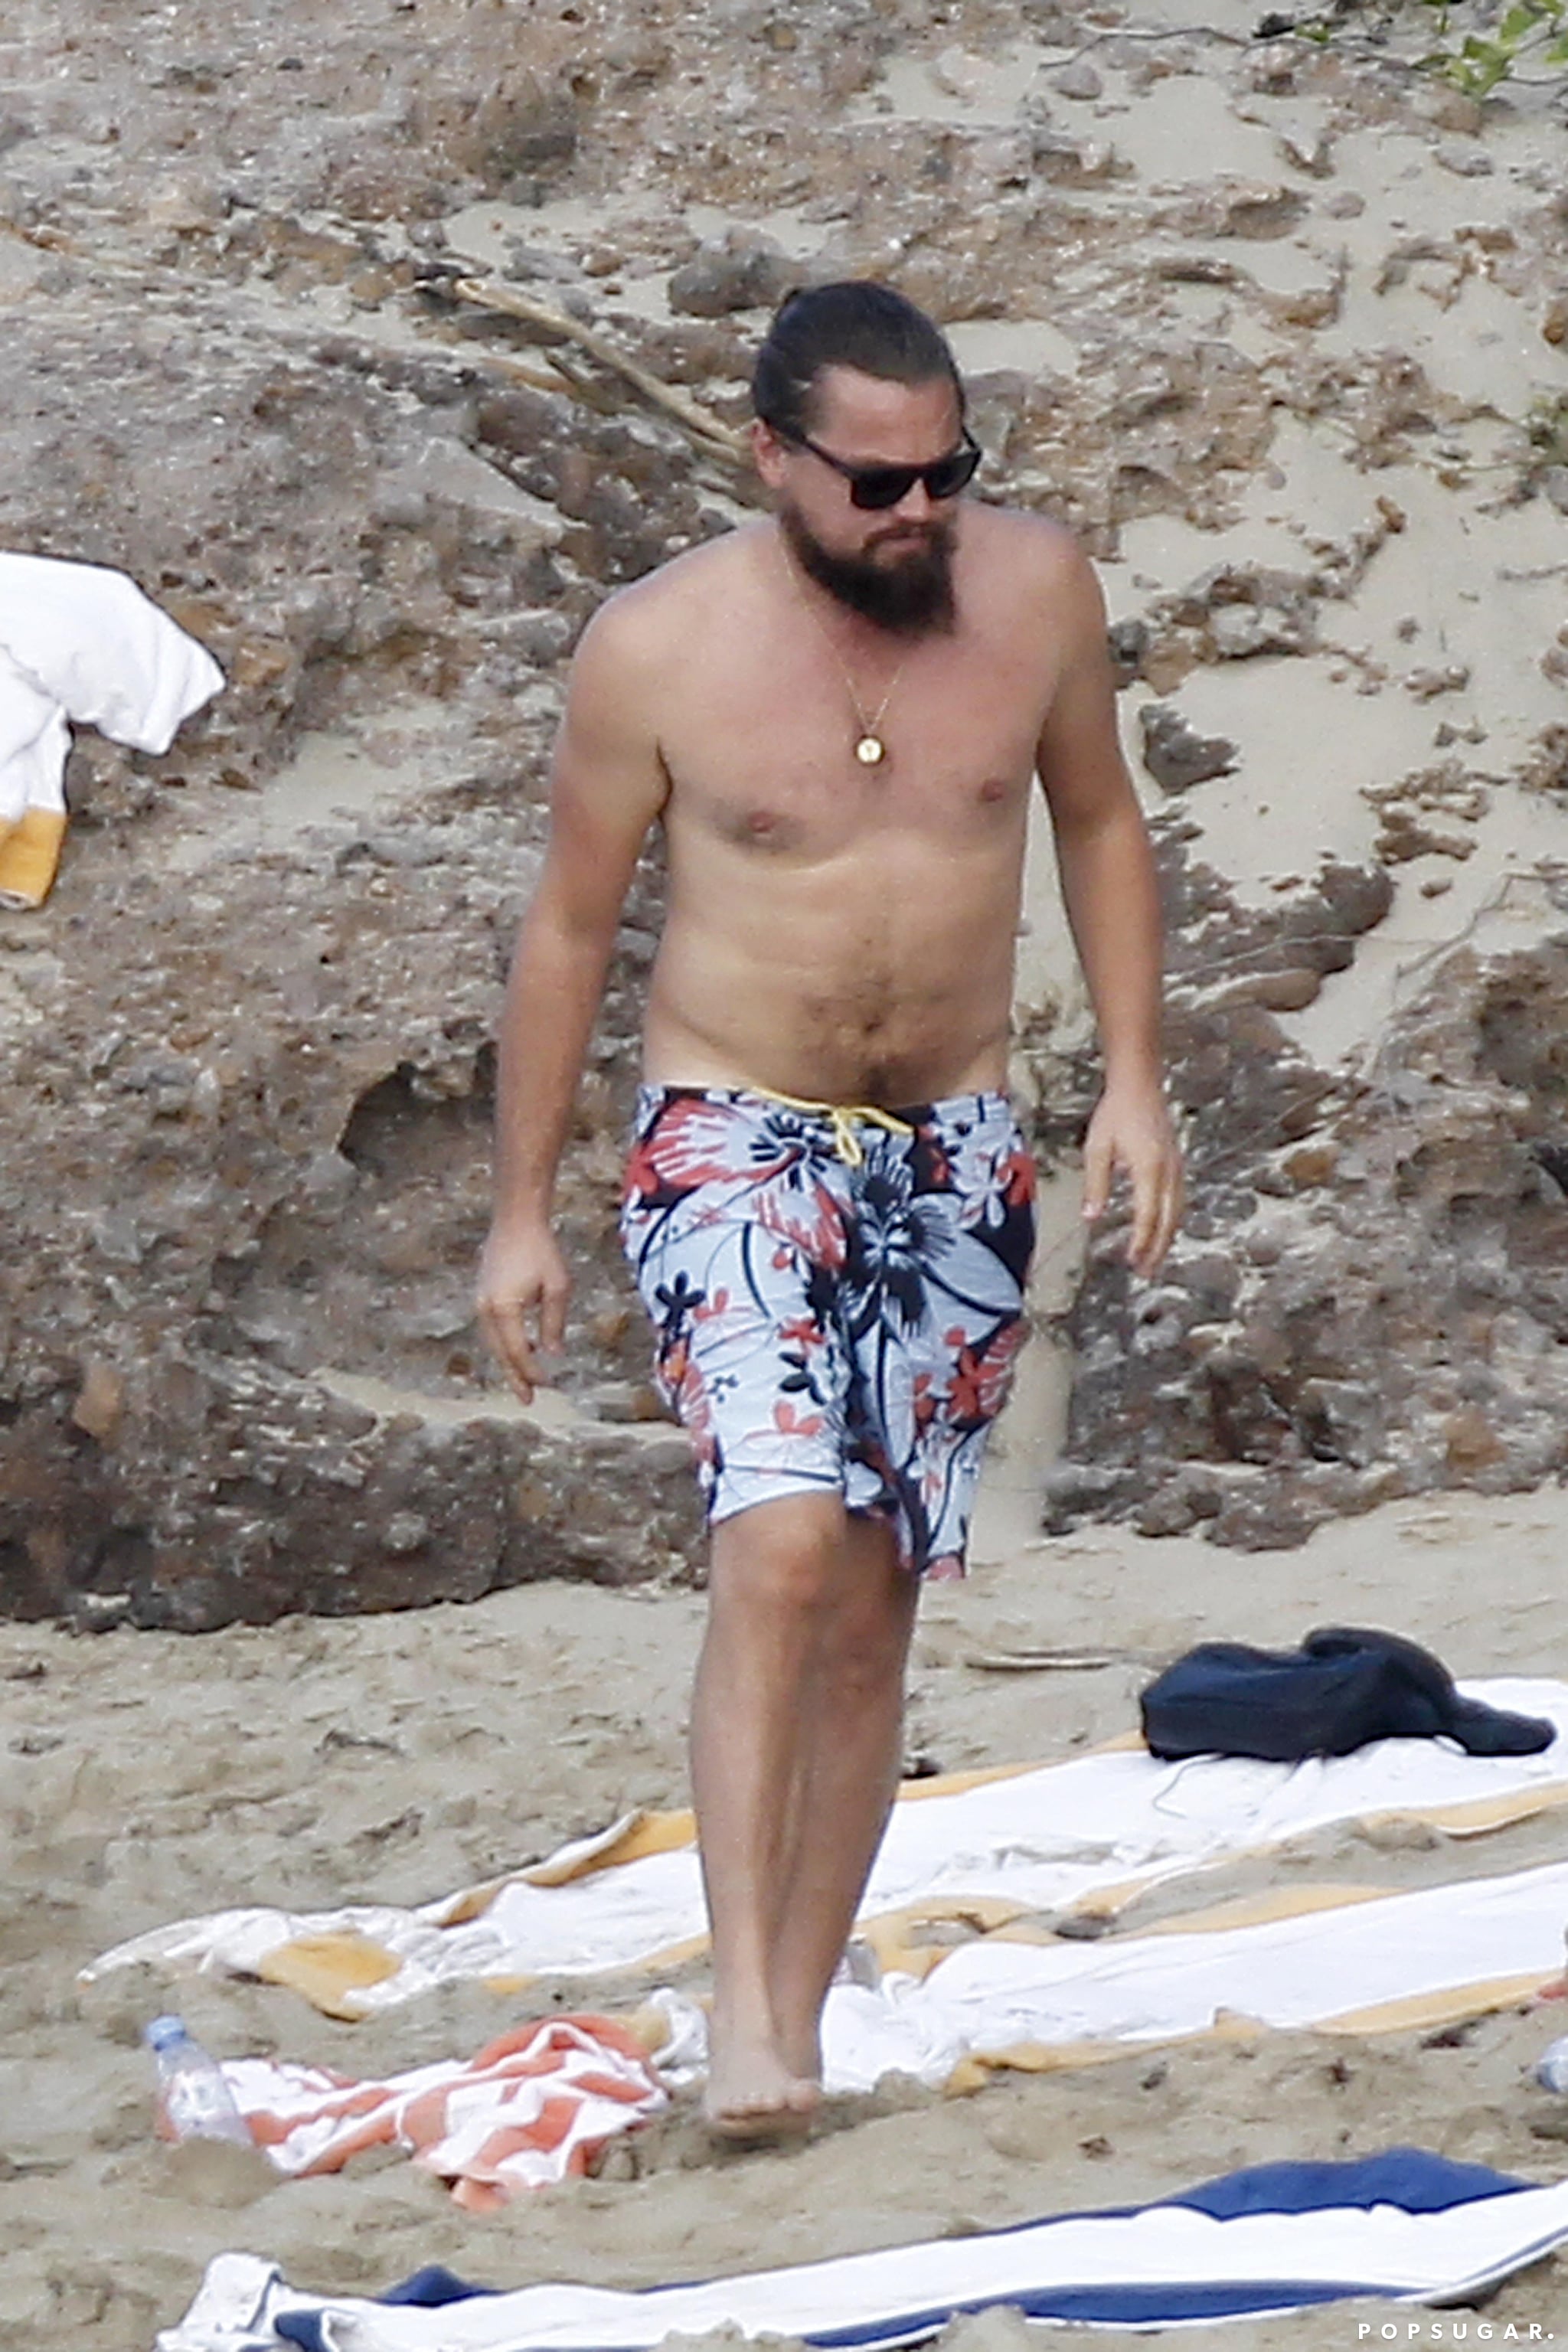 DiCaprio Shirtless in St. Barts Pictures | POPSUGAR Celebrity